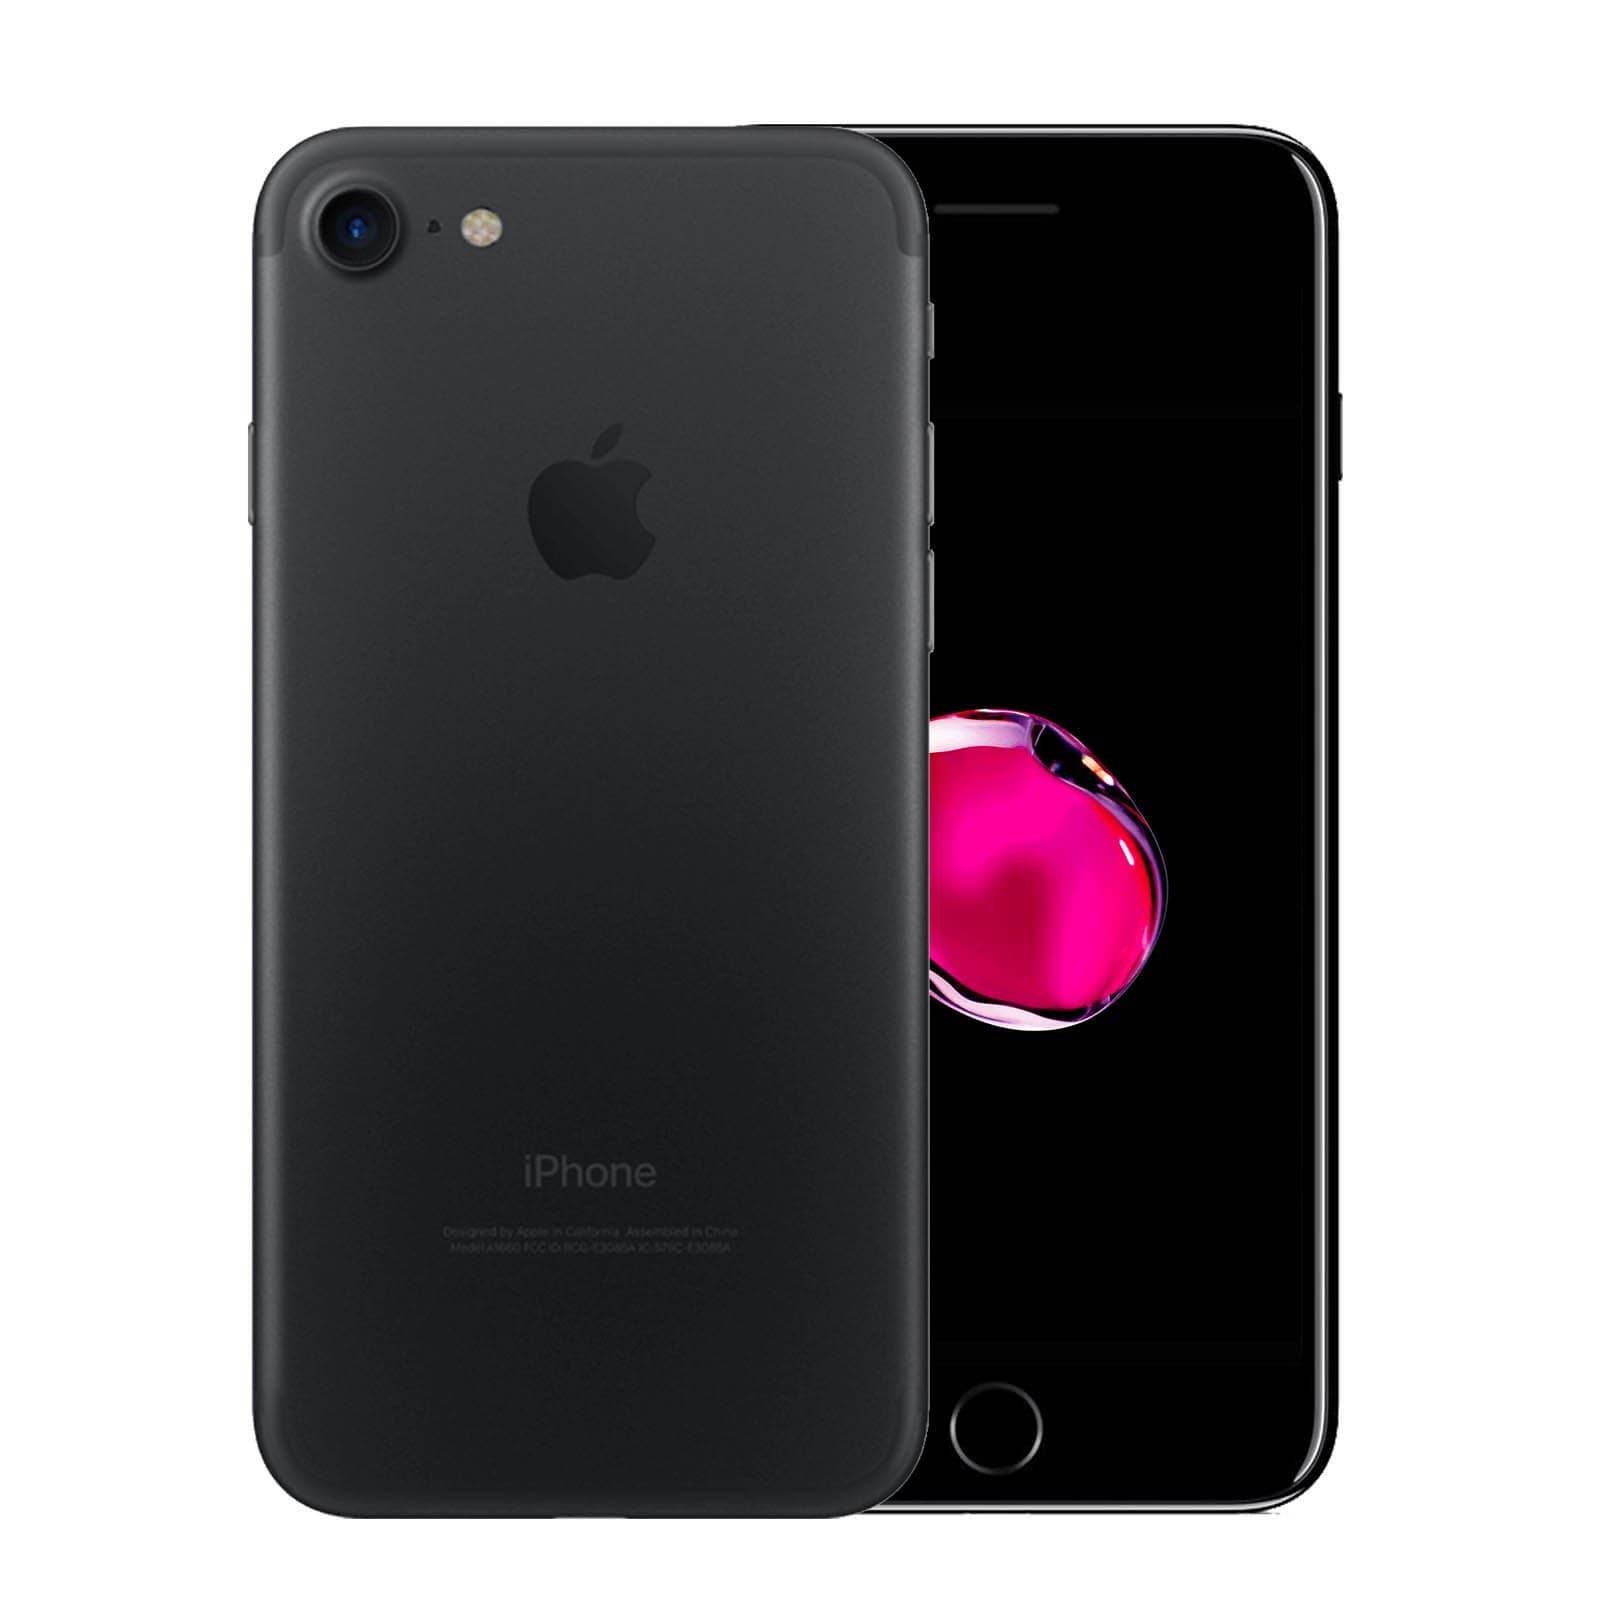 Apple iPhone 7 32GB Black Very Good - Unlocked 32GB Black Very Good